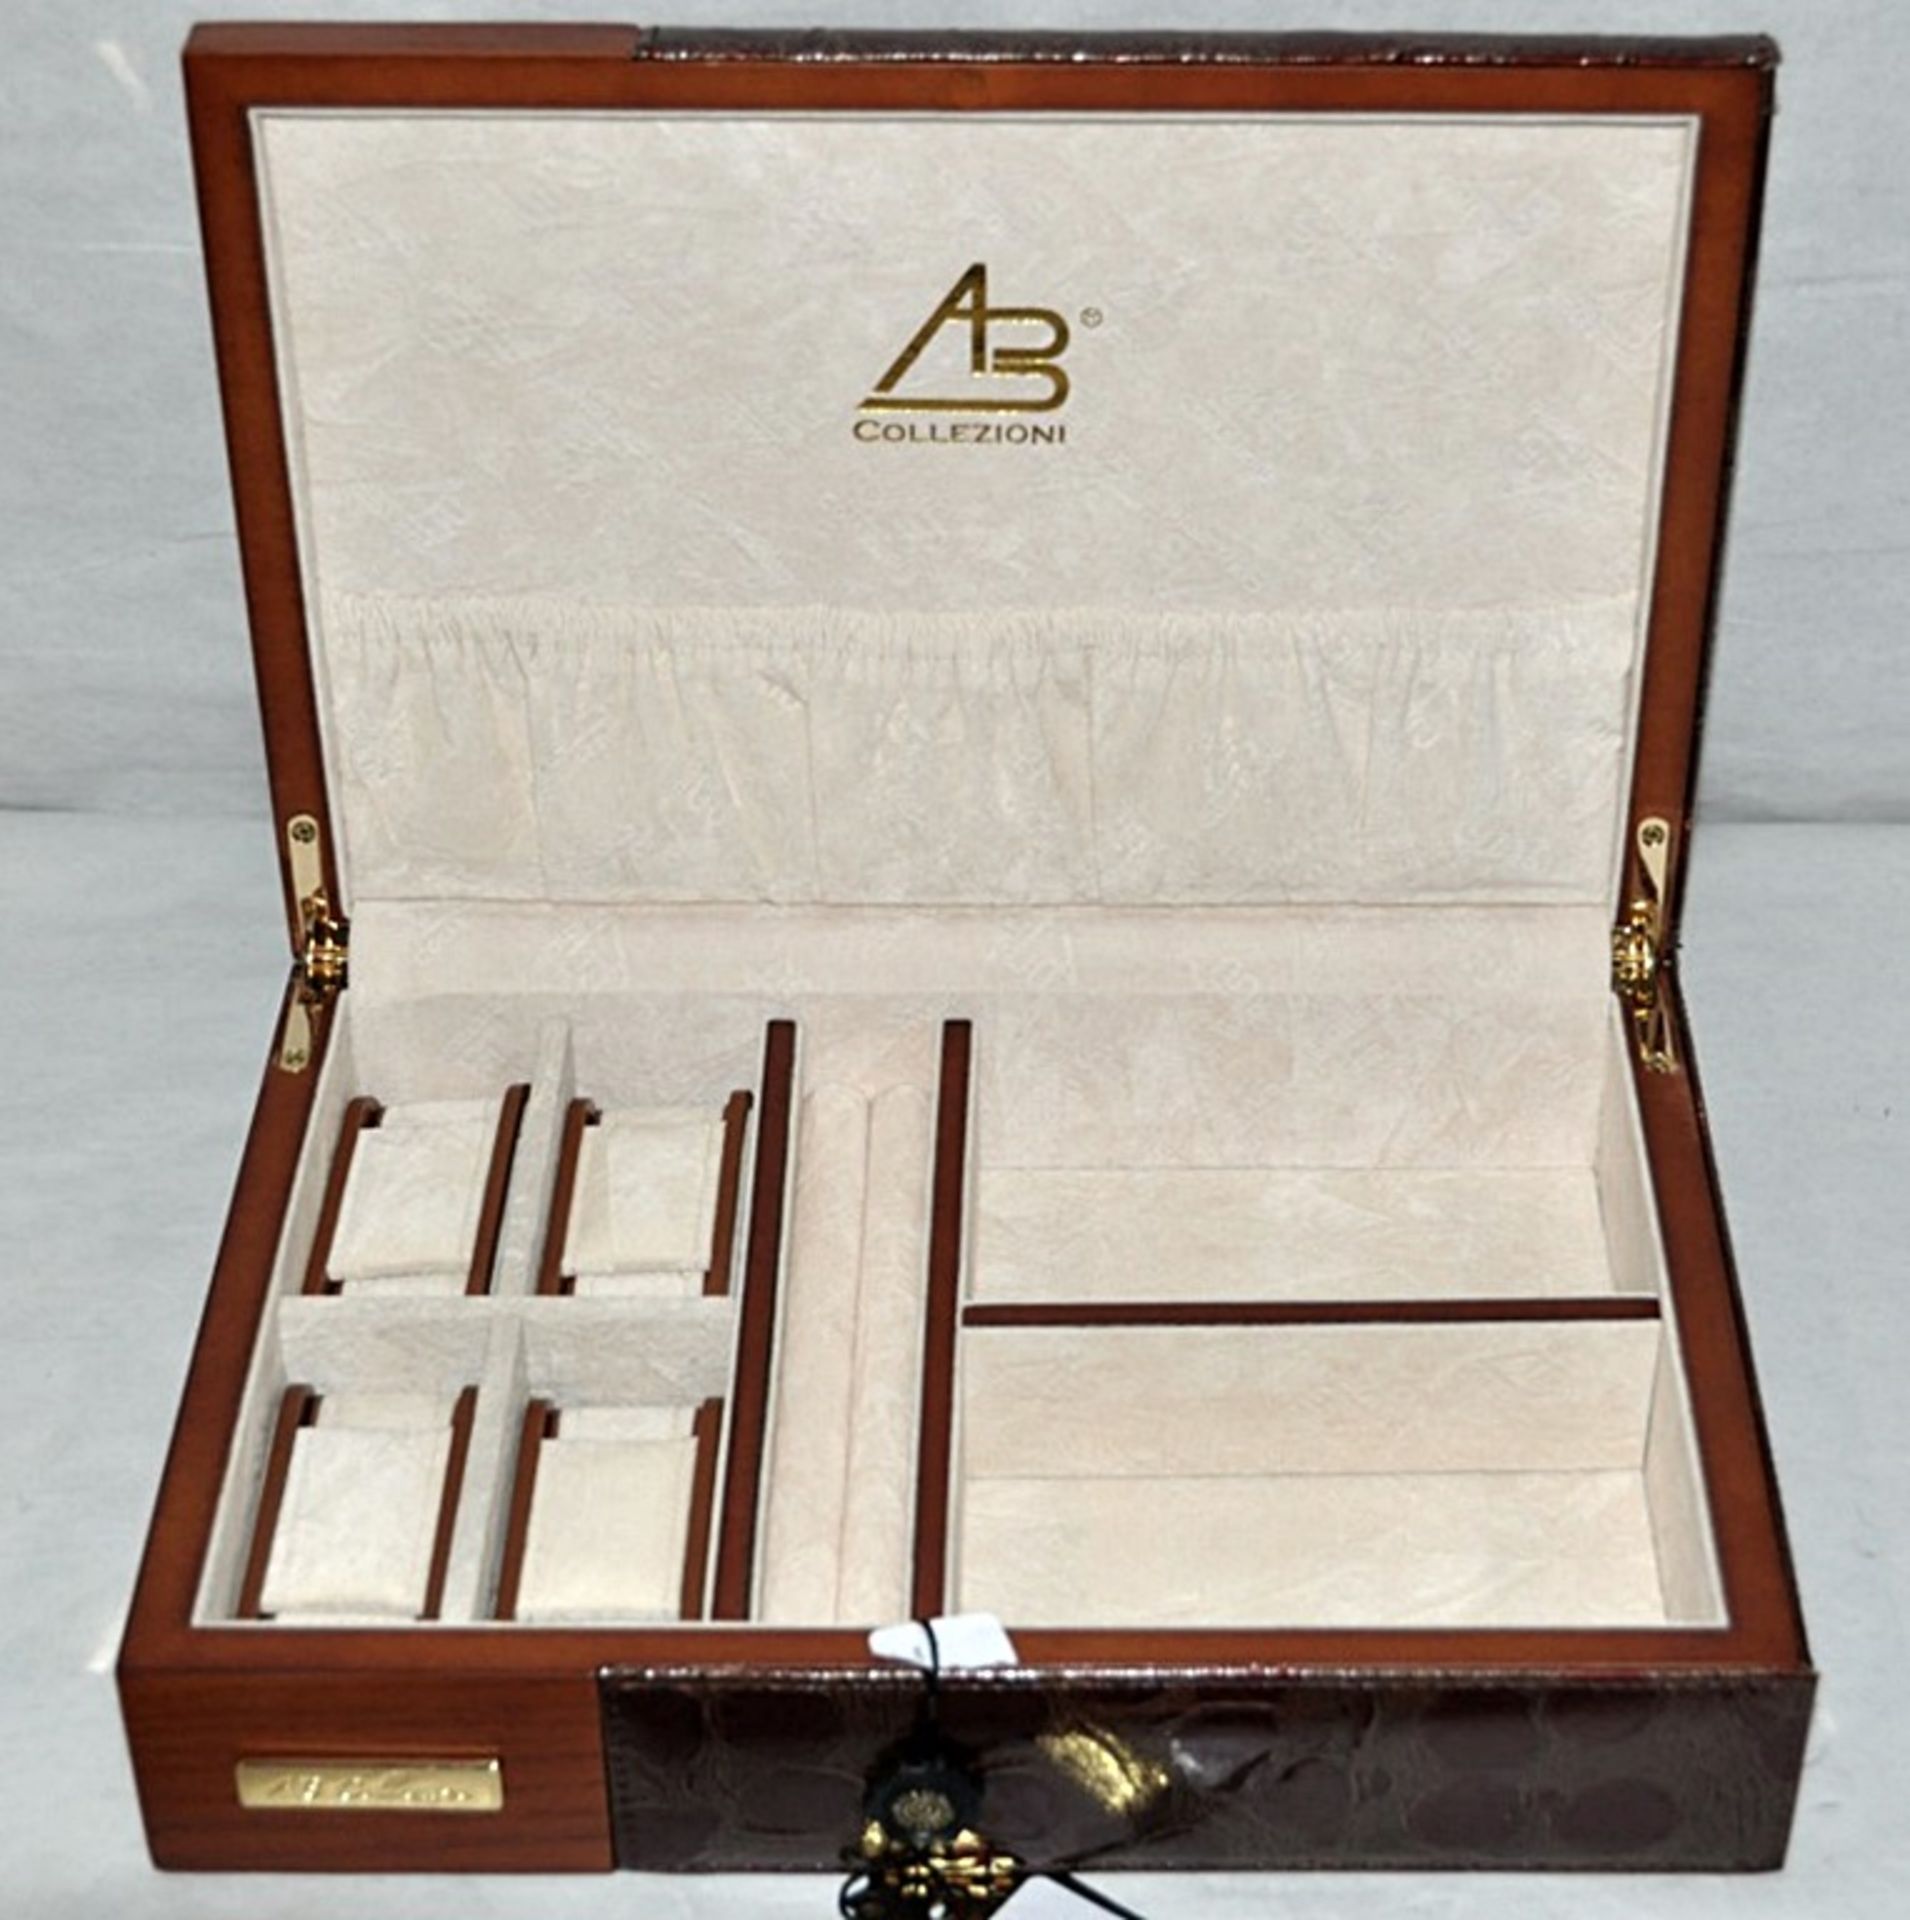 1 x  1 x "AB Collezioni" Italian Luxury Jewellery Box With 4 Watch Compartments (W021) - Ref